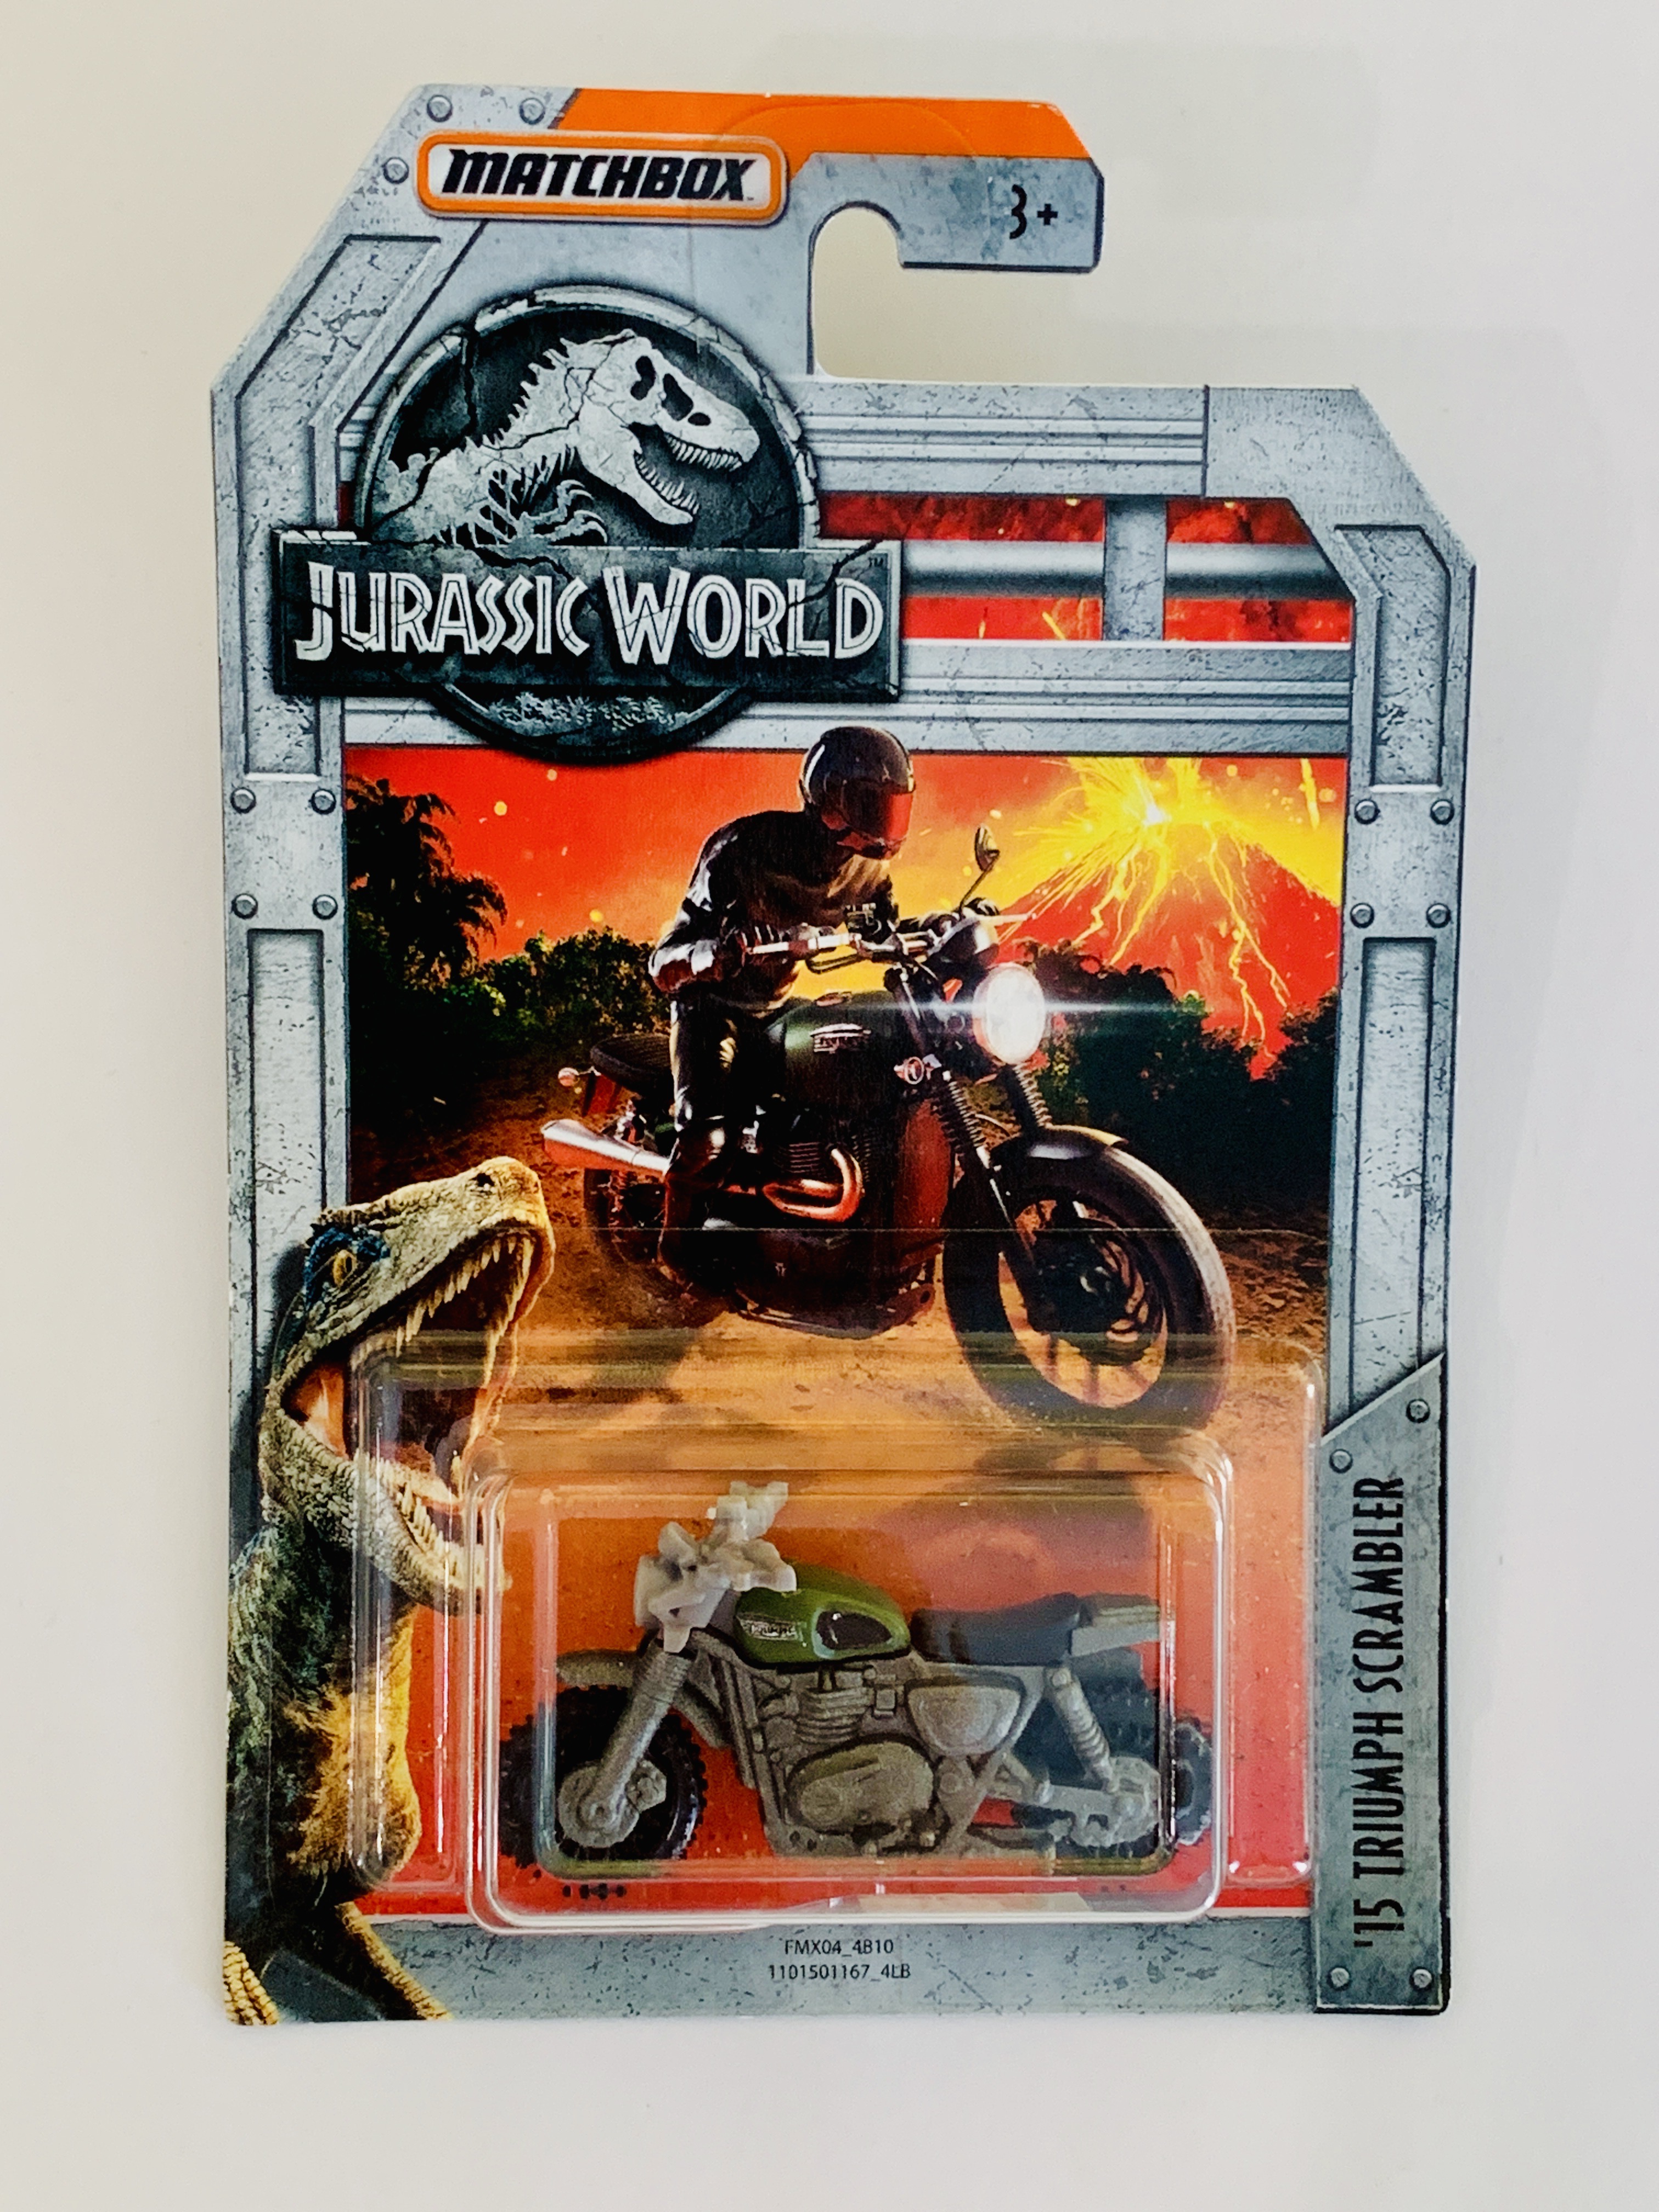 Matchbox Jurassic World '15 Triumph Scrambler